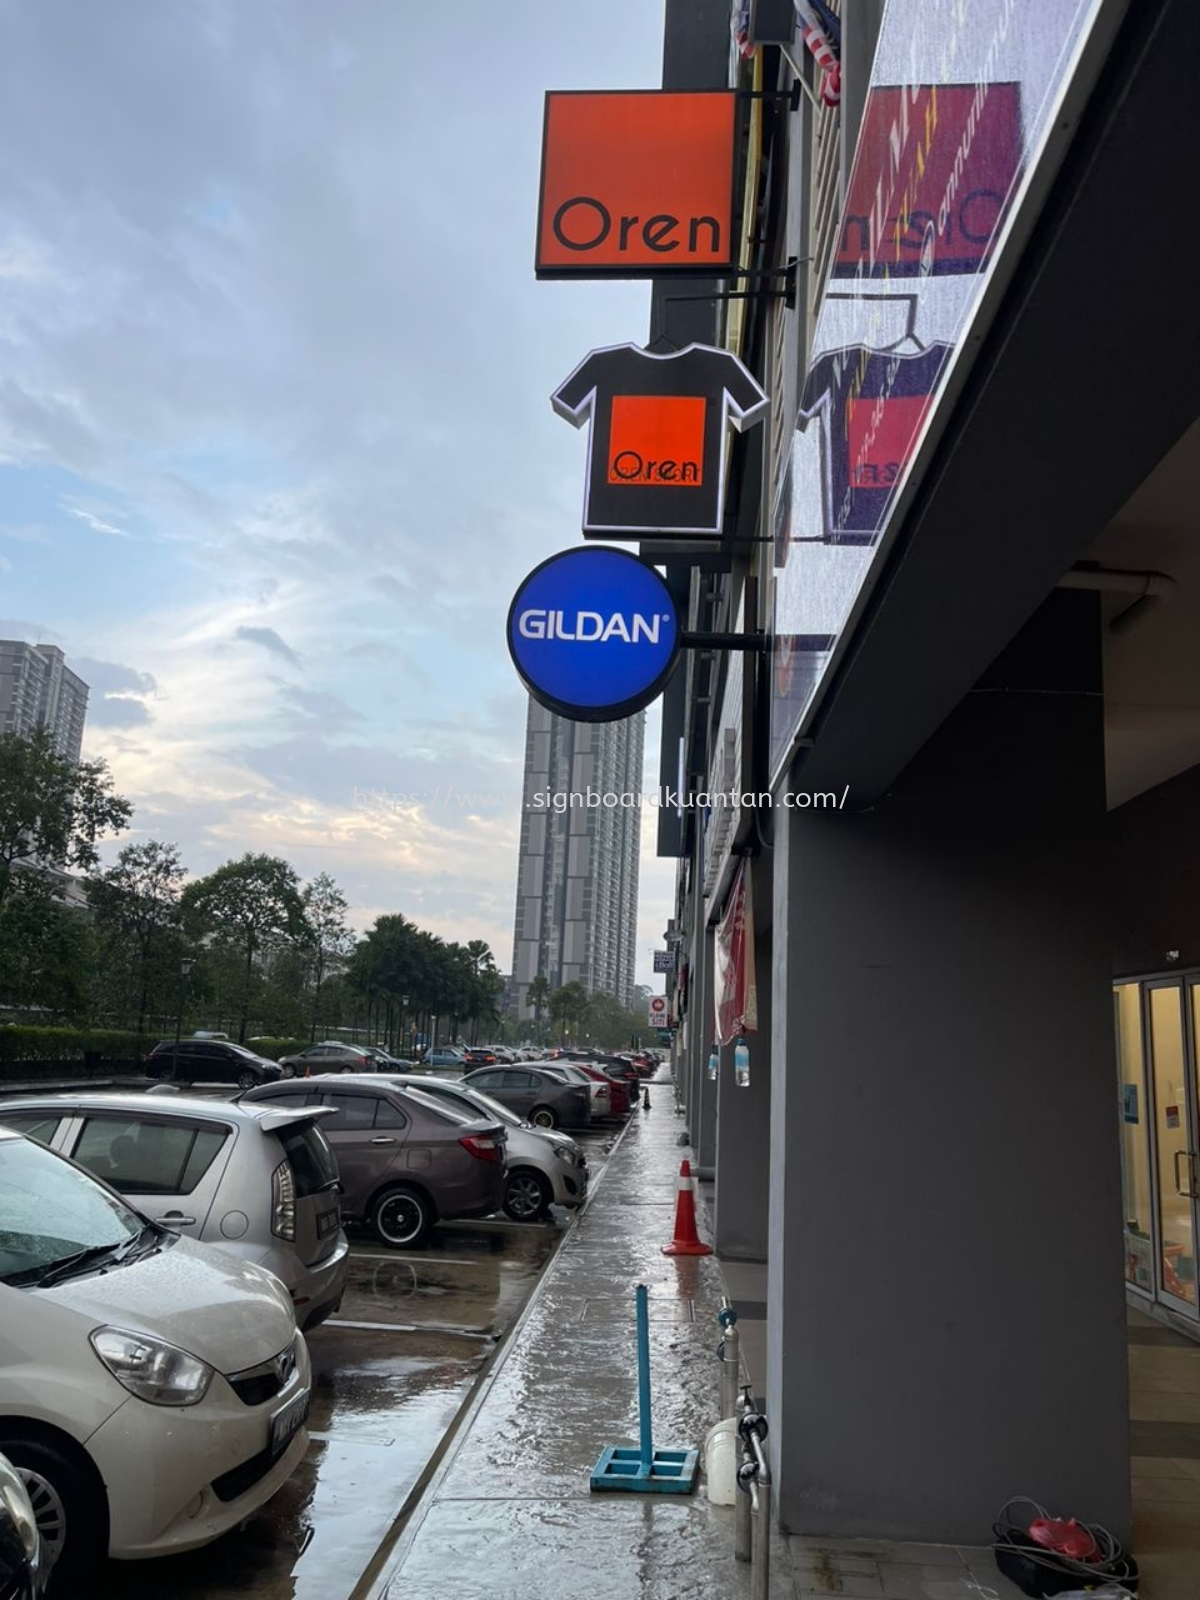 GILDAN OUTDOOR ROUND SHAPE DOUBLE SIDE LIGHTBOX AT PEKAN TOWN, KUALA PAHANG, CHINI, BEBAR, BELIMBING, CHEROK PALOH, NENASI, PALOH HINAI PEKAN PAHANG MALAYSIA